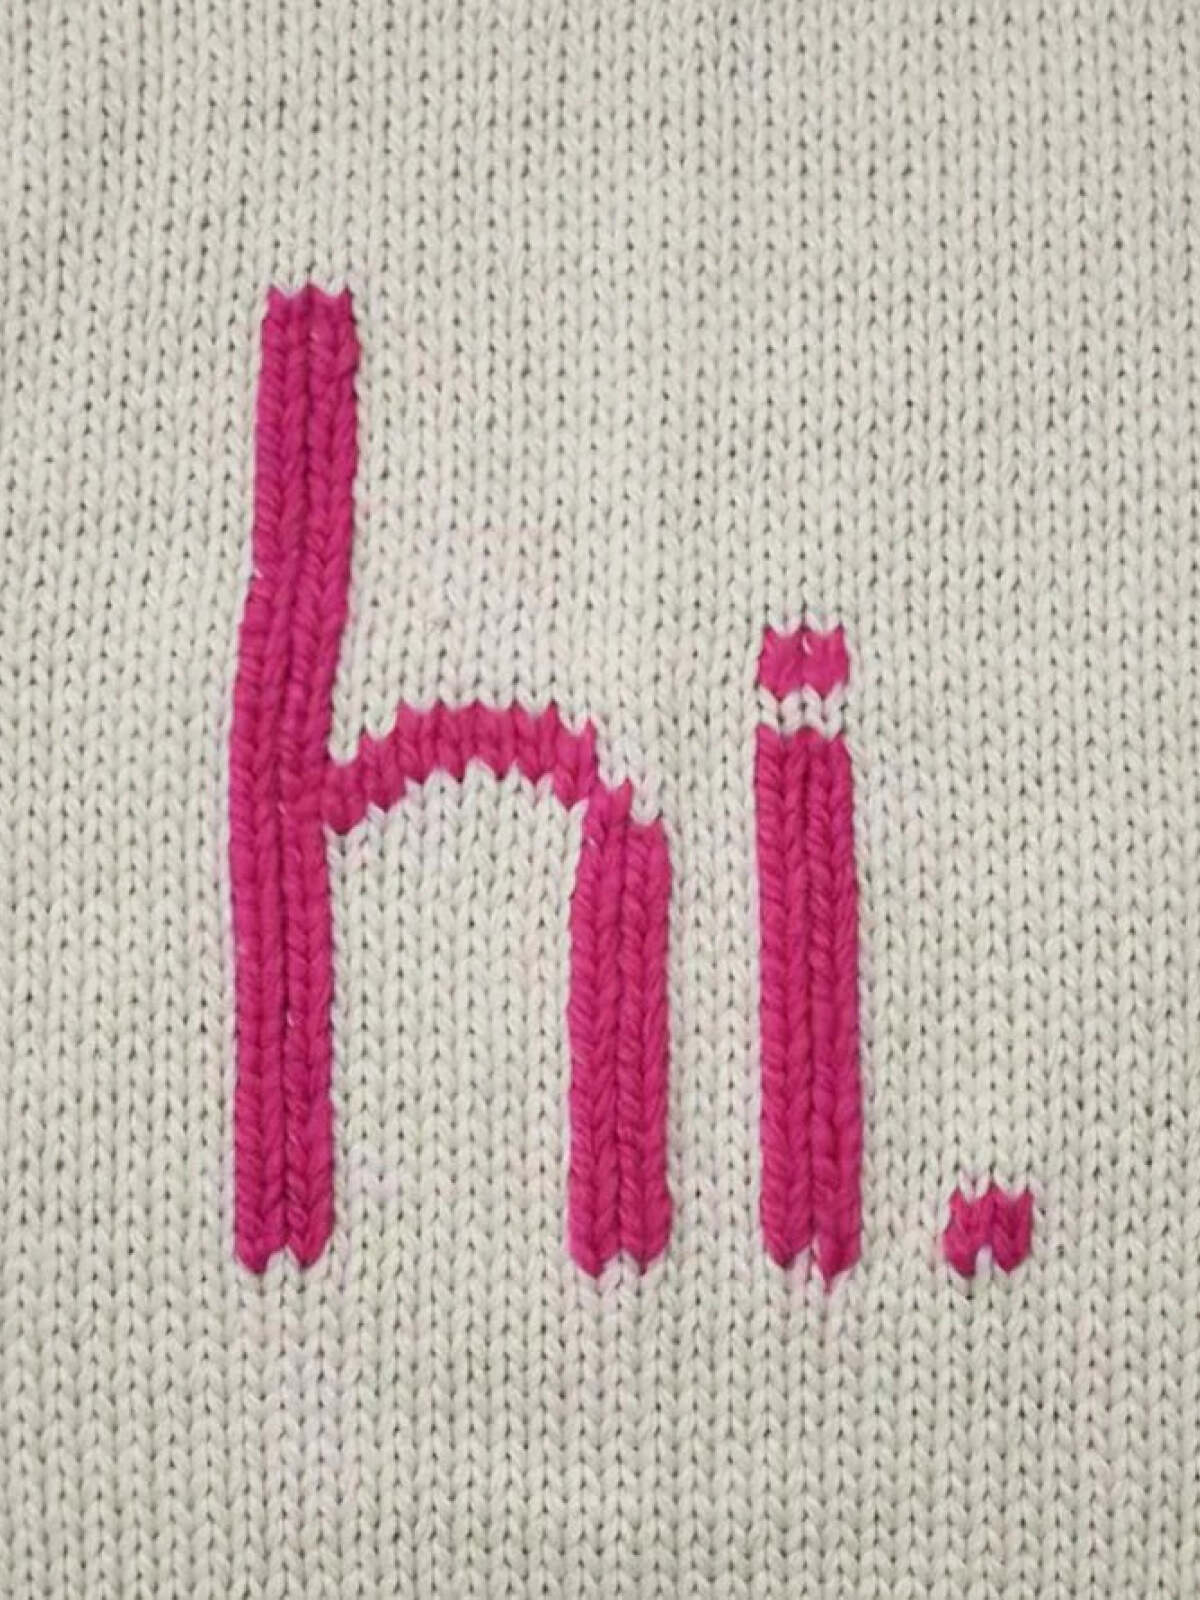 Hi. Hand Knit Blanket, Neon Pink